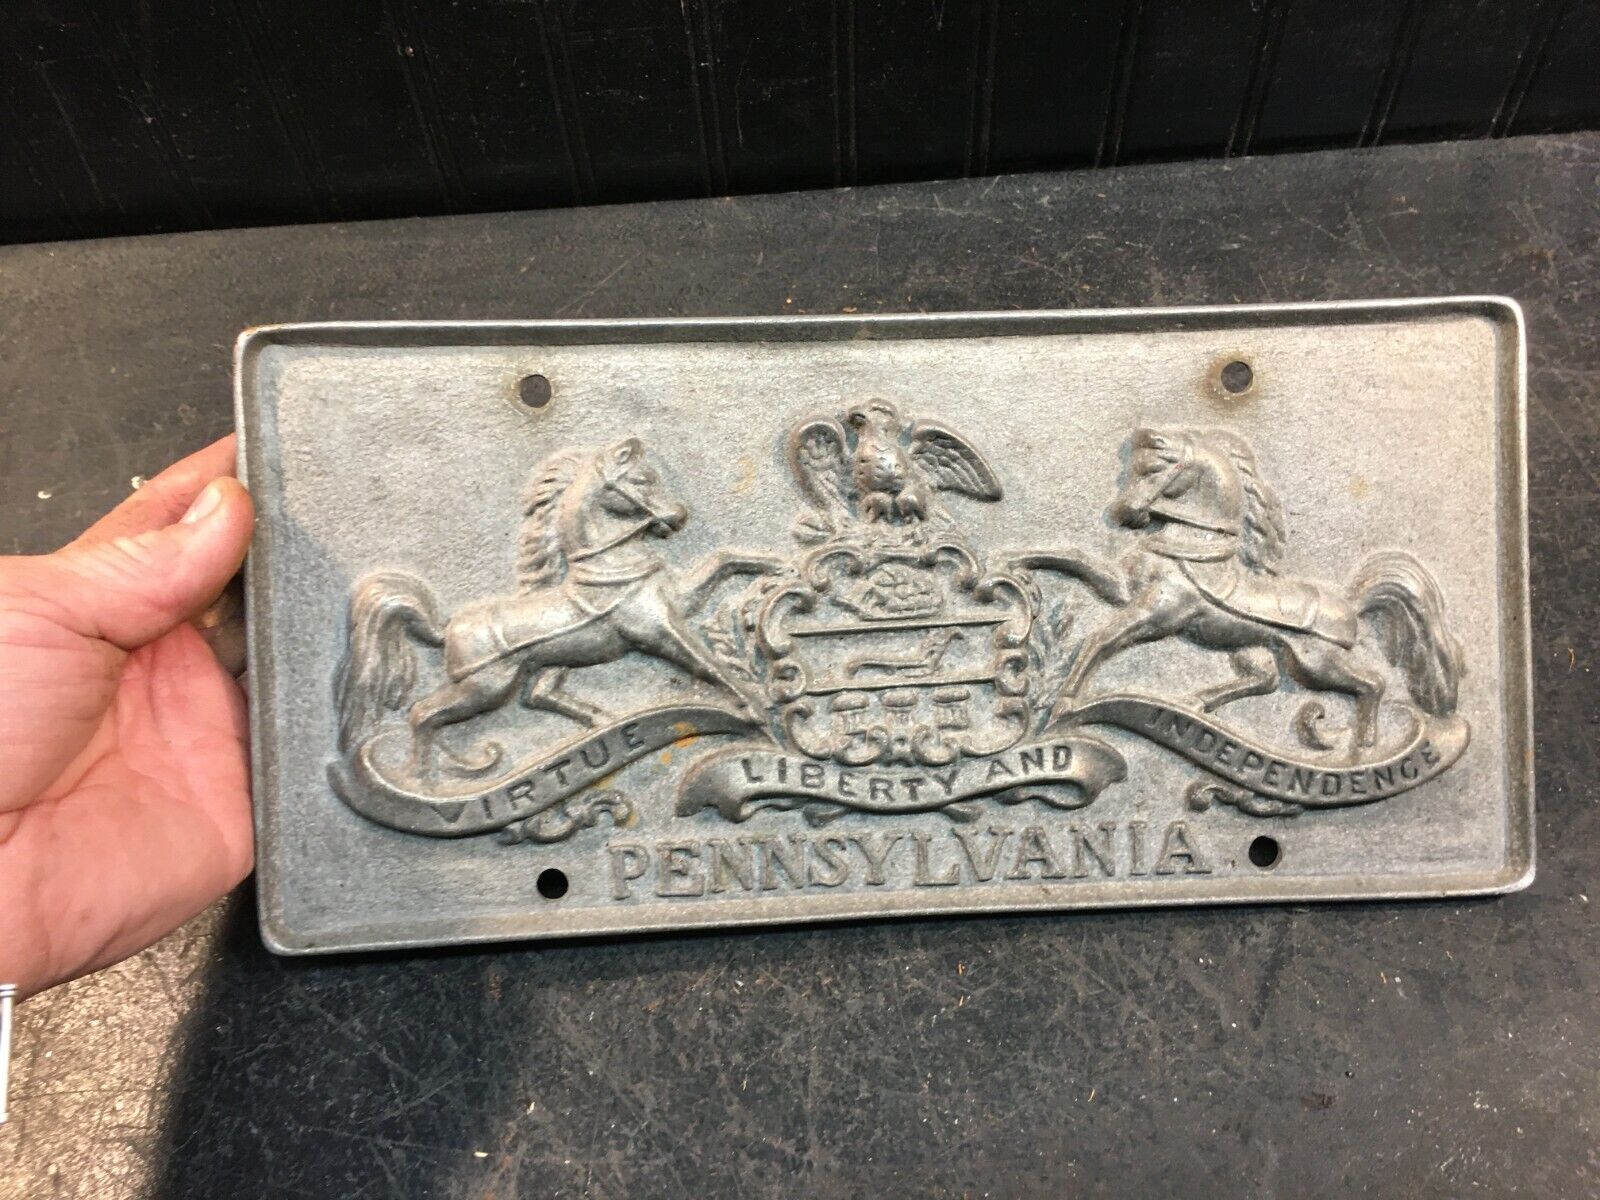 Cast aluminum license plate - Pennsylvania Bicentennial 1776 - 1976